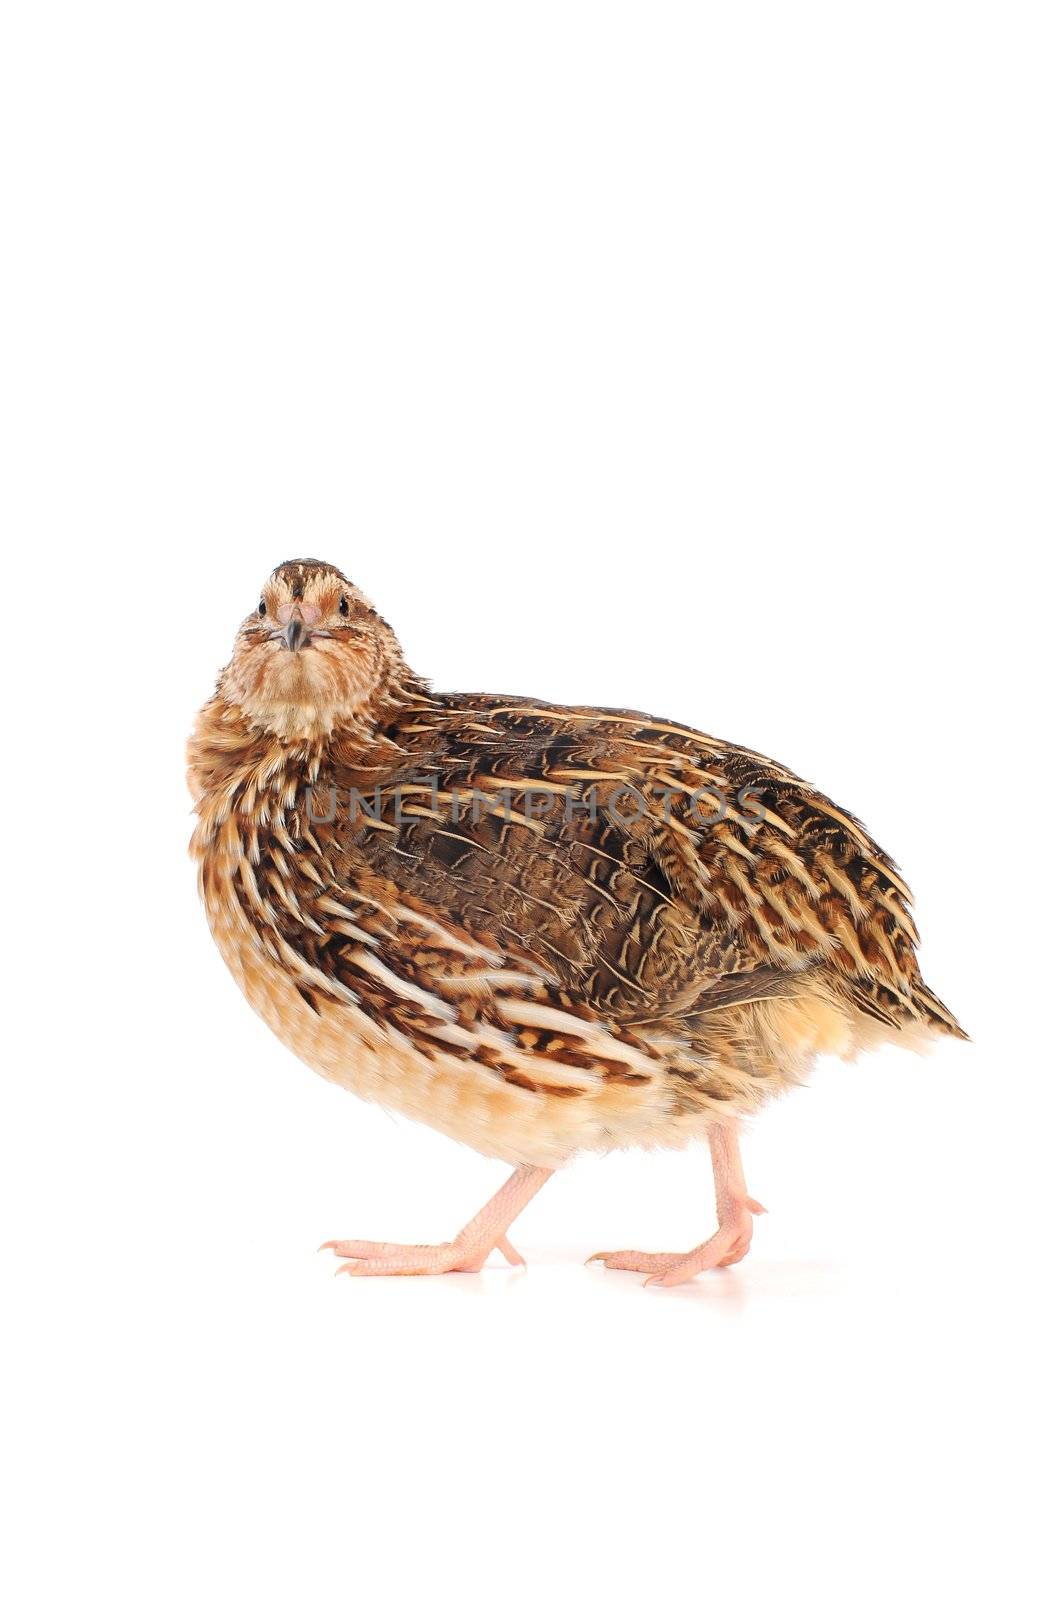  quail  by panbazil